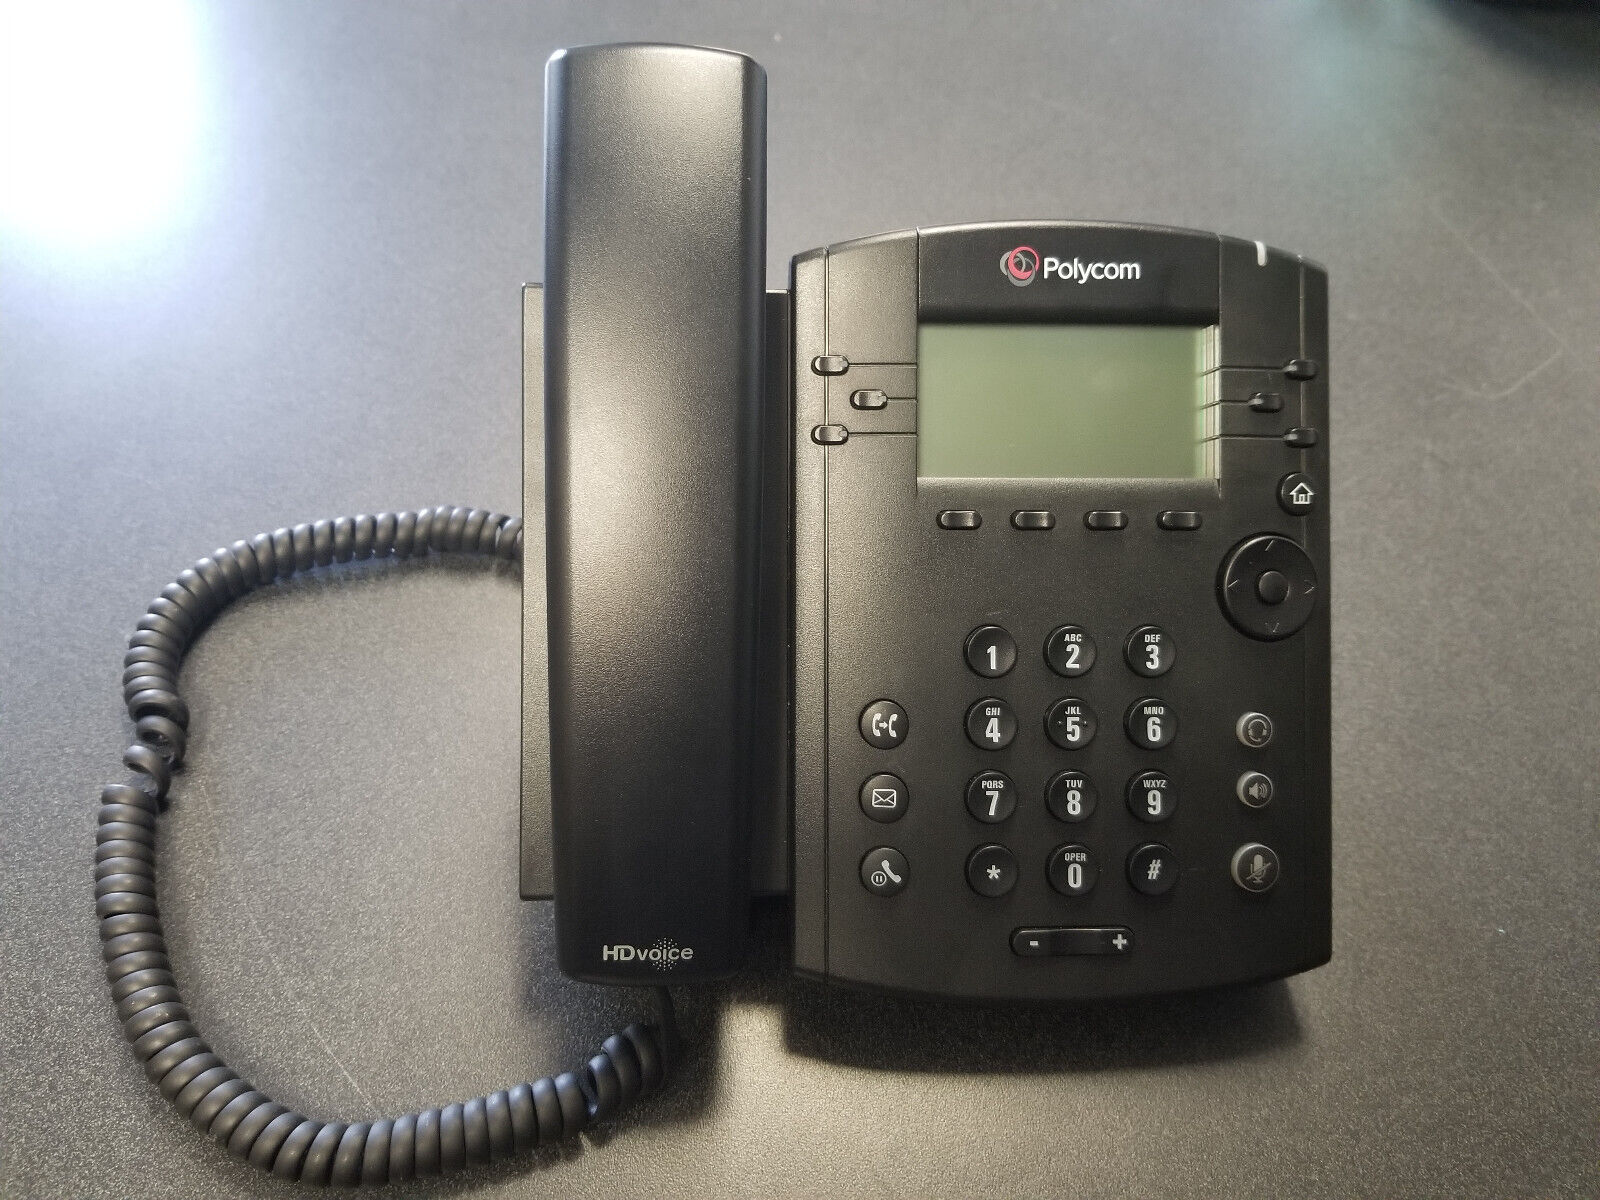 LOT OF 6 - Polycom VVX310 6-Line Business VoIP Phone - Black